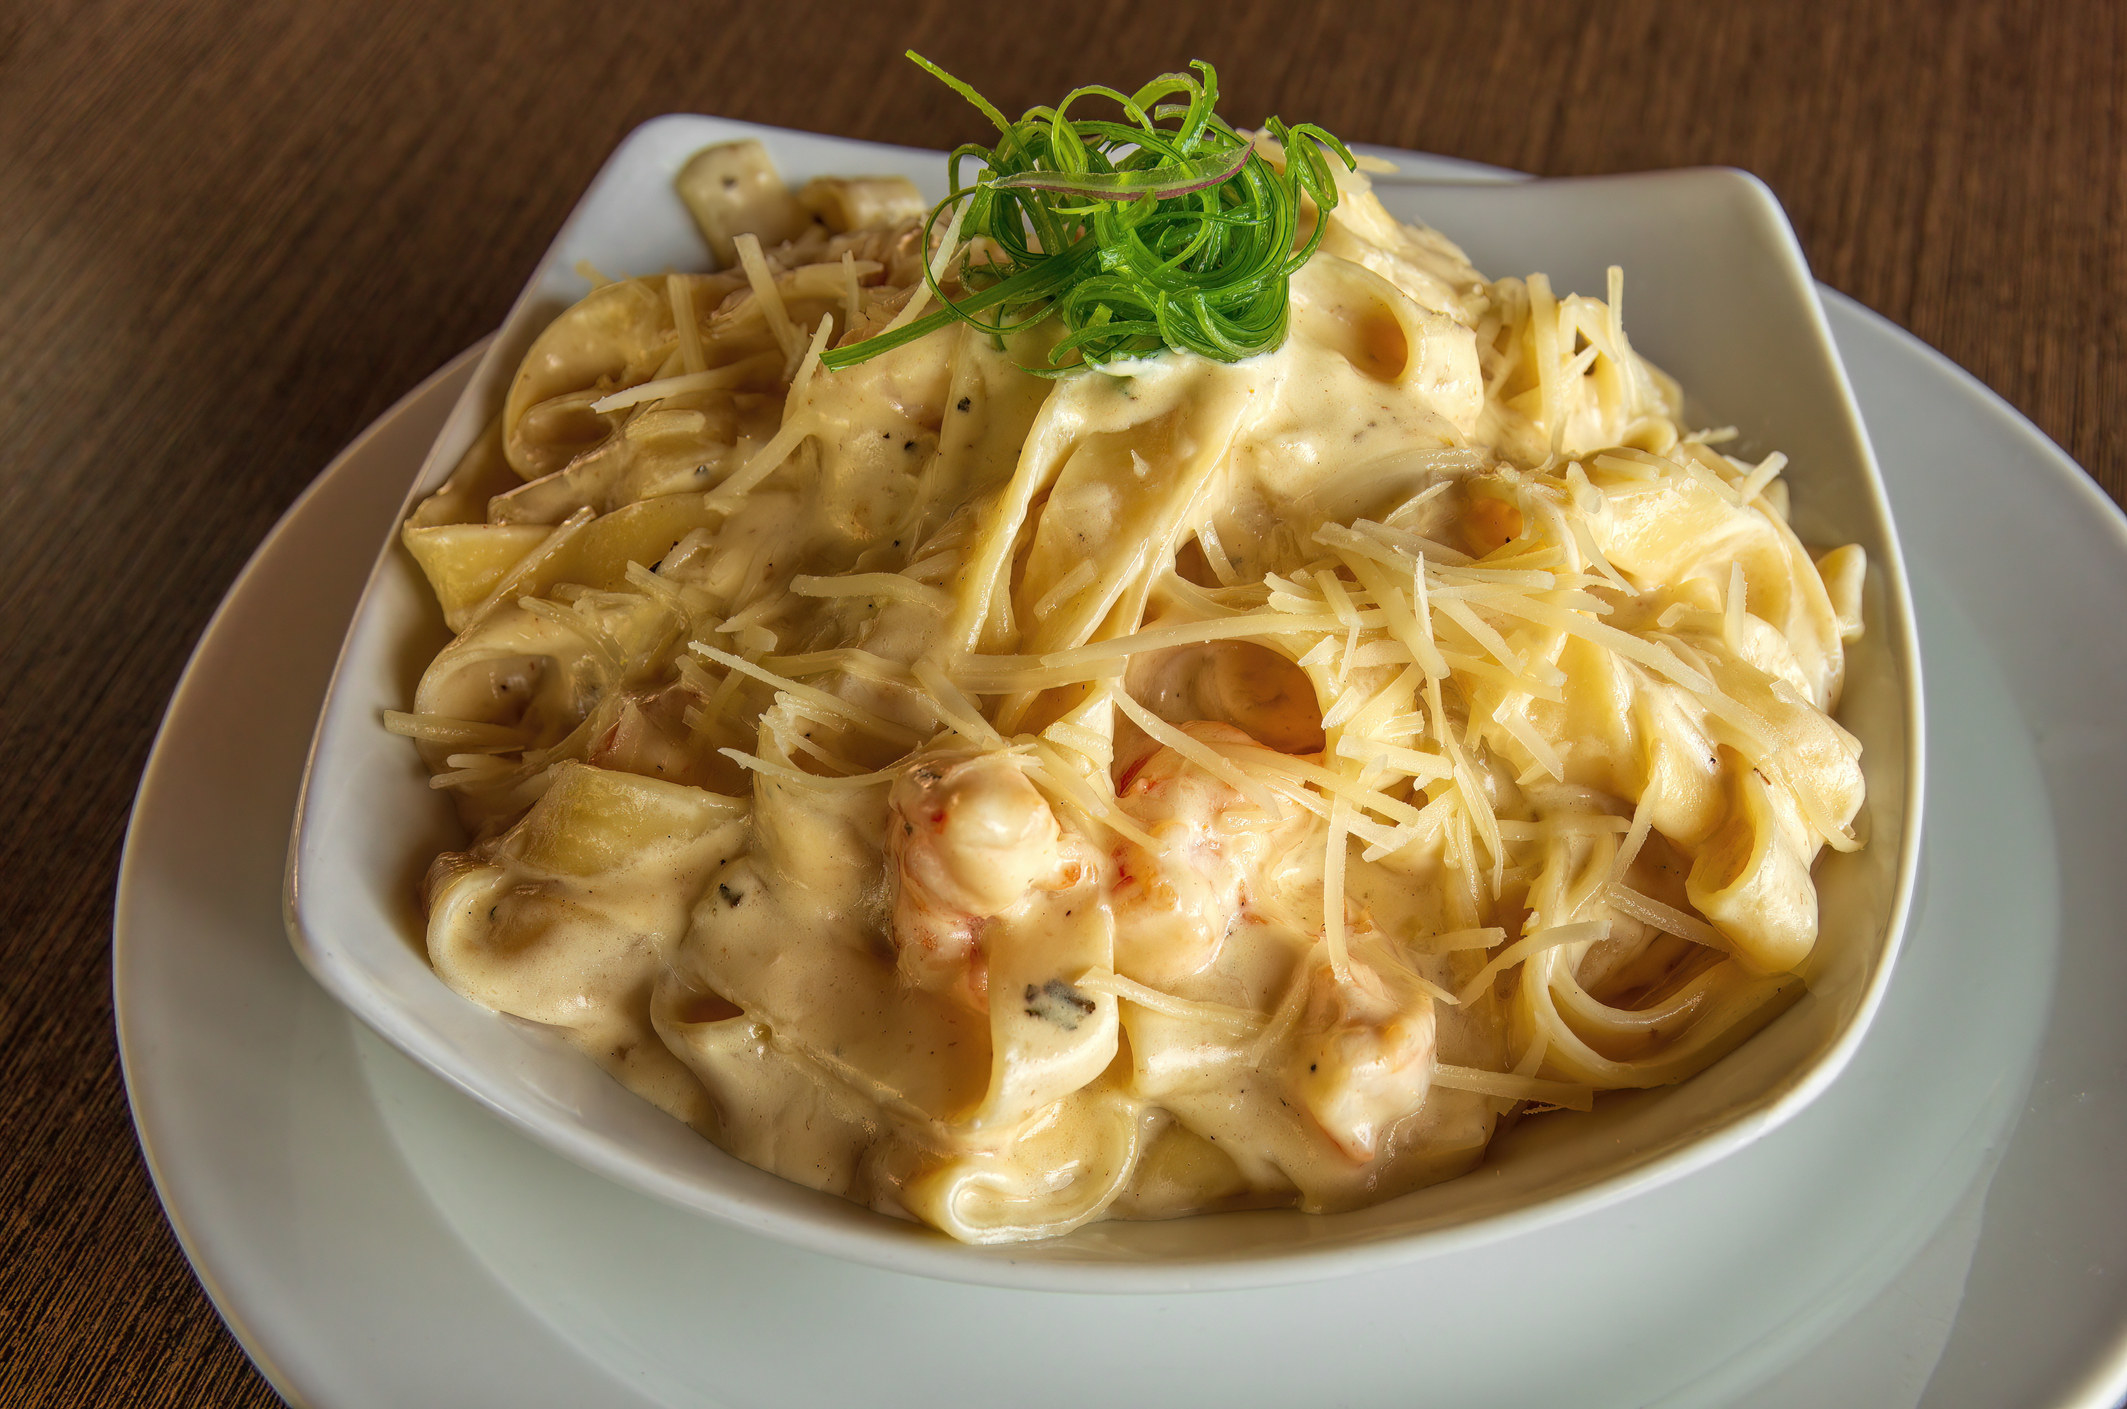 A plate of pasta Alfredo.